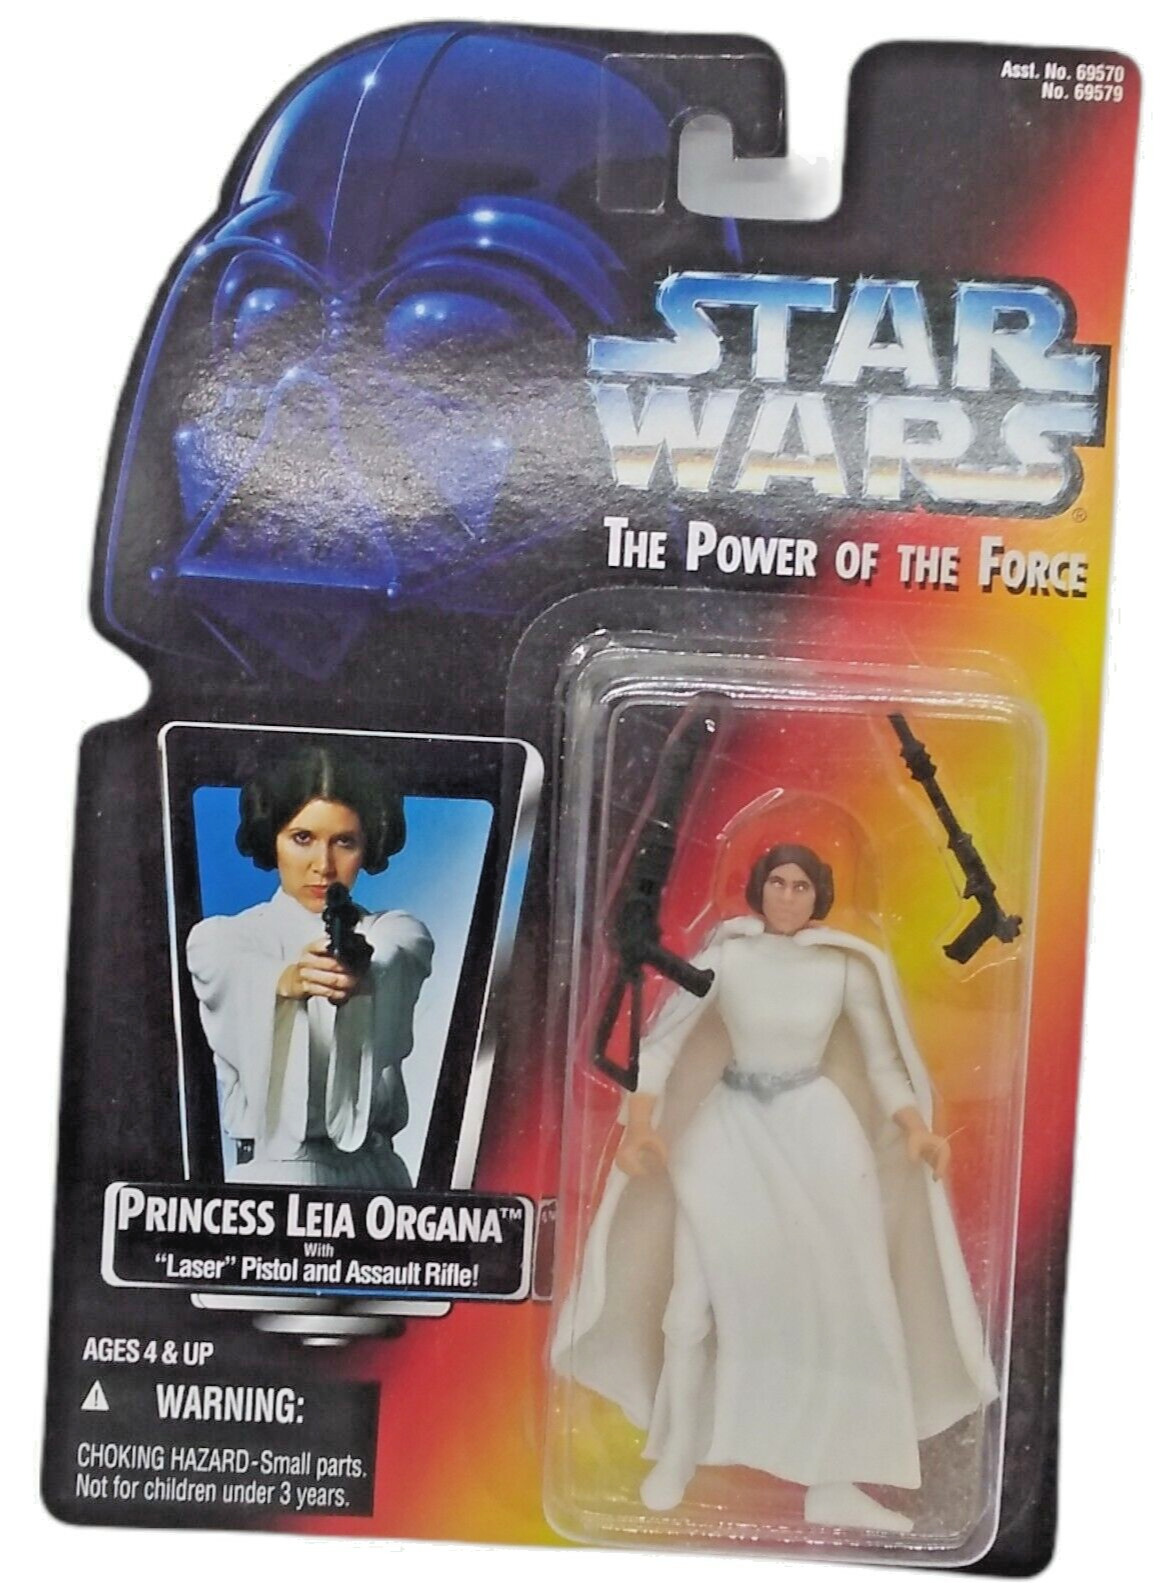 1995 Kenner Star Wars POTF Princess Leia Organa Action Figure w Assault Rifle